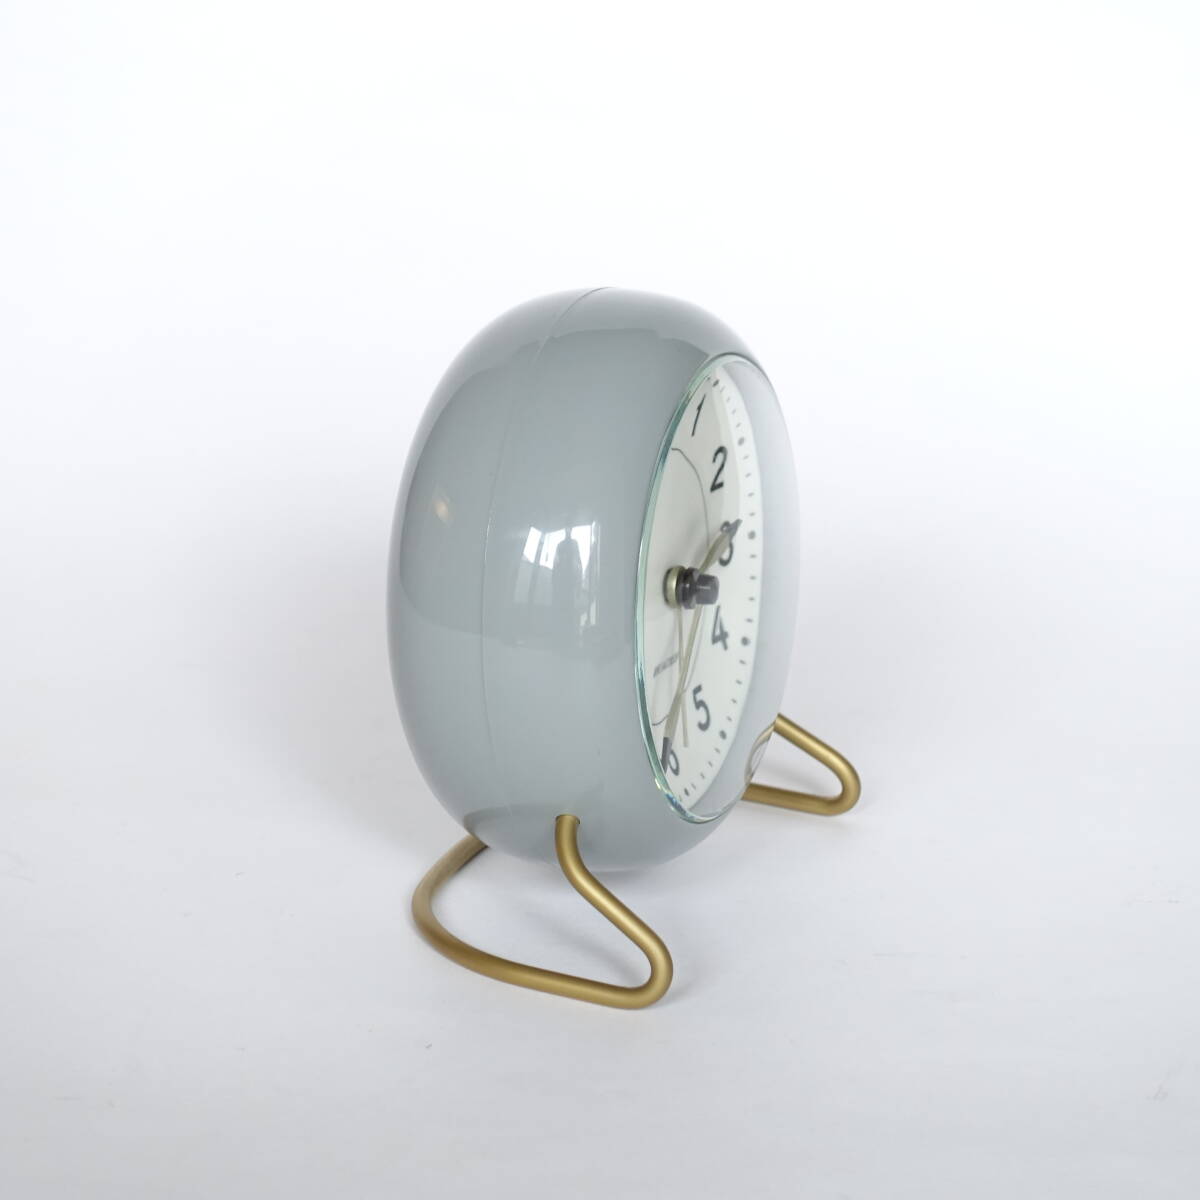 ARNE JACOBSENa Rene * Jacobsen / TABLE CLOCK стол часы / STATION стойка / ограничение цвет : серый / 43674